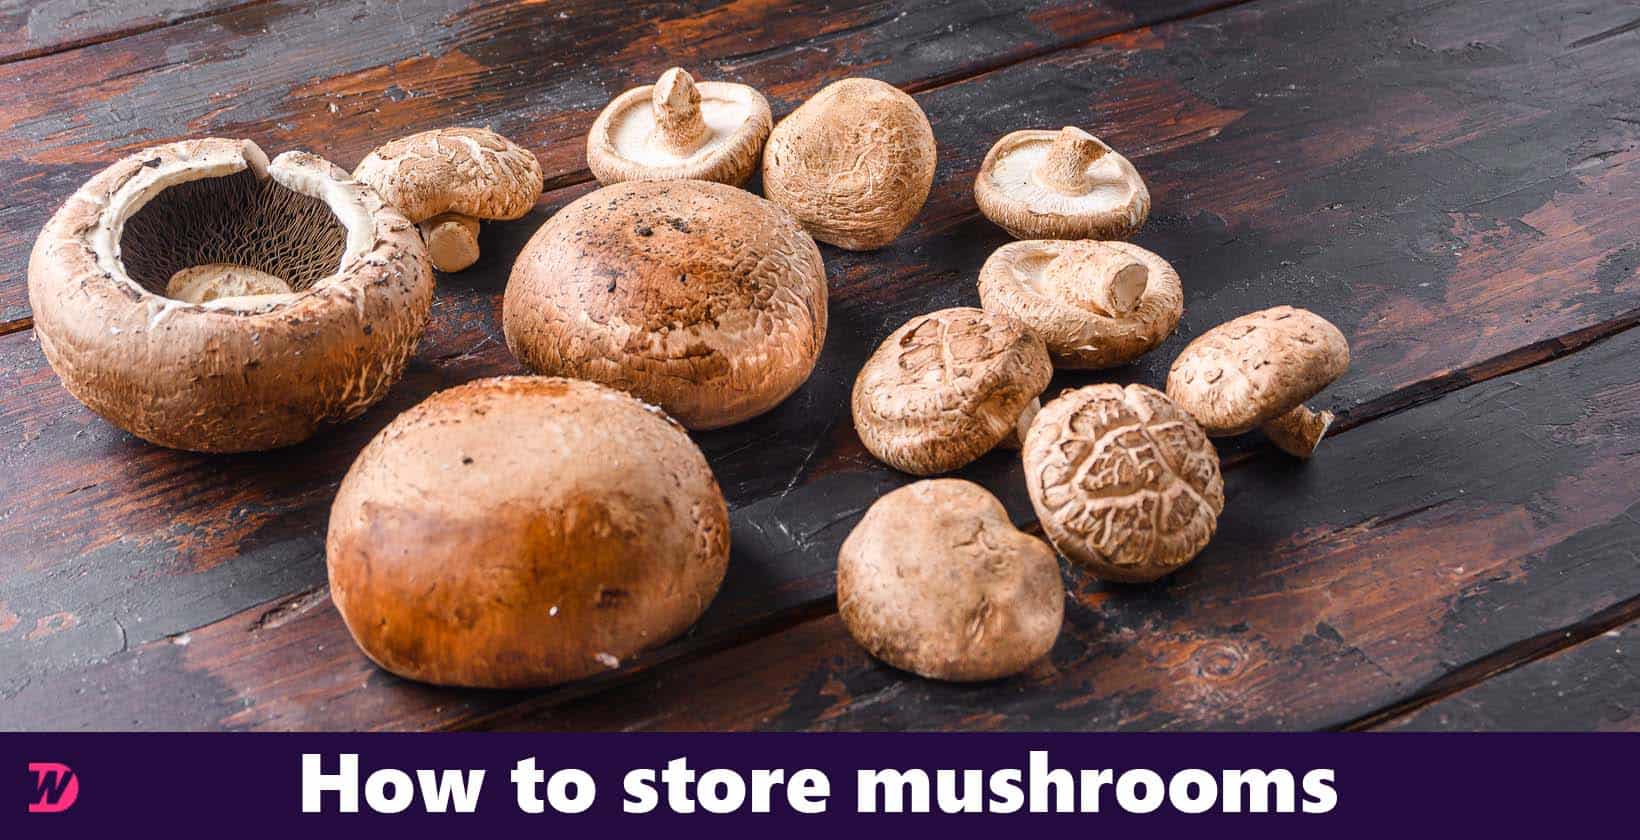 Storing mushrooms